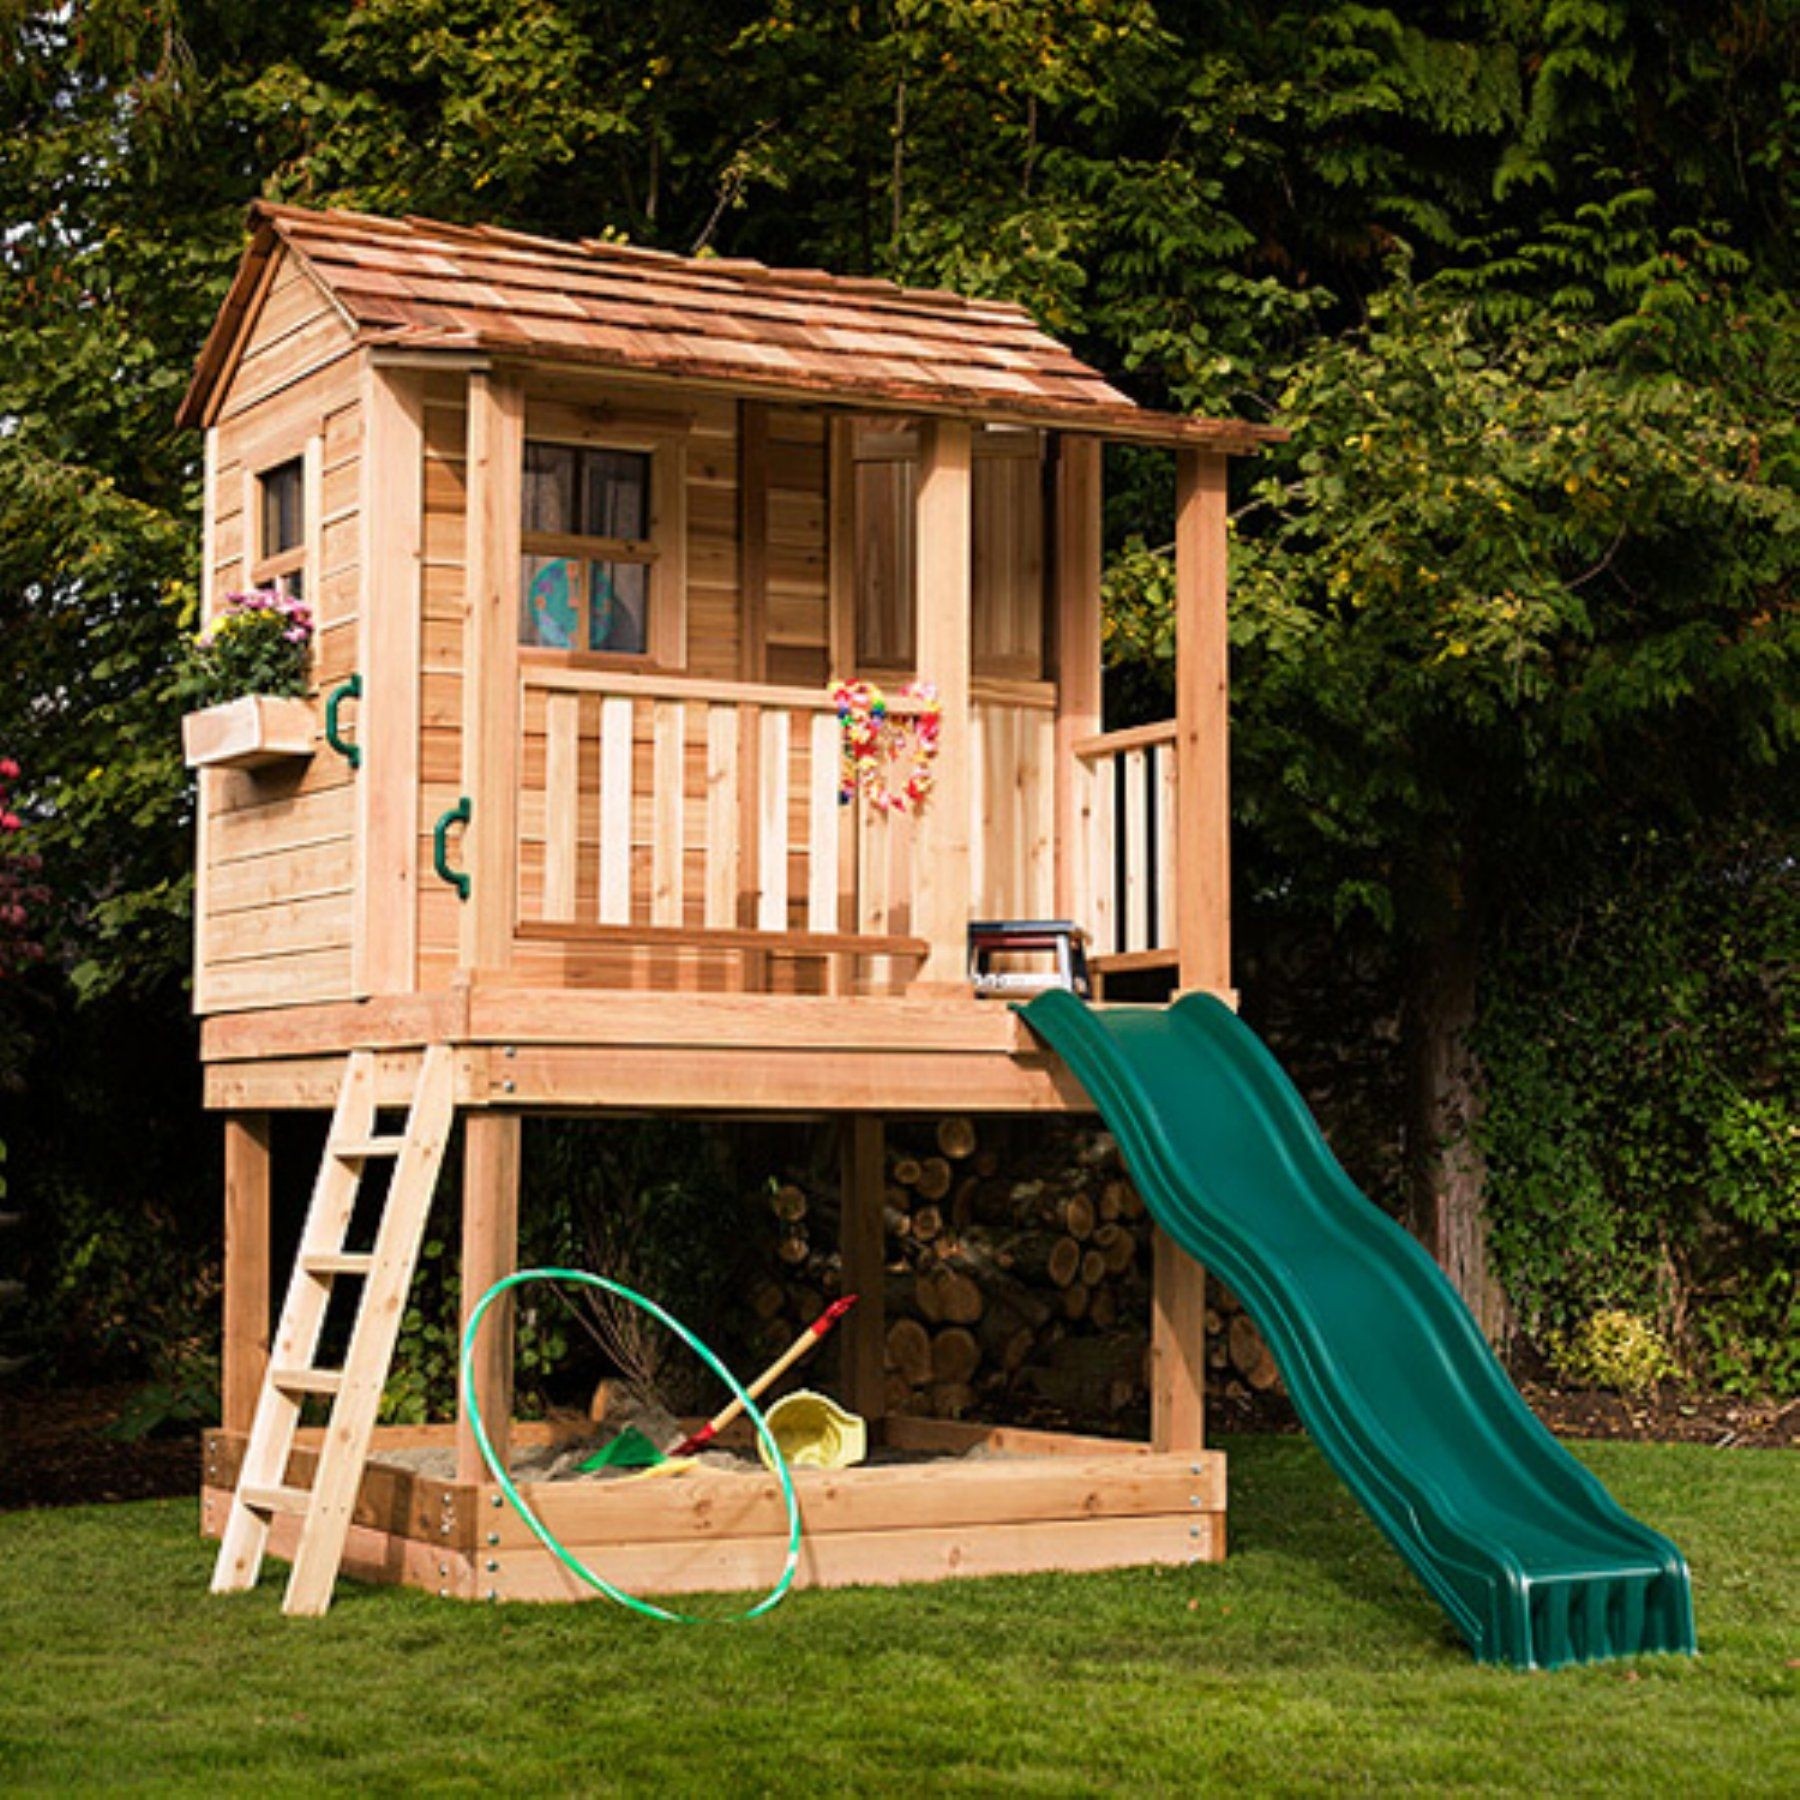 Solid Wood backyard Indoor / Outdoor Playhouse kids children 3-8 yrs old 